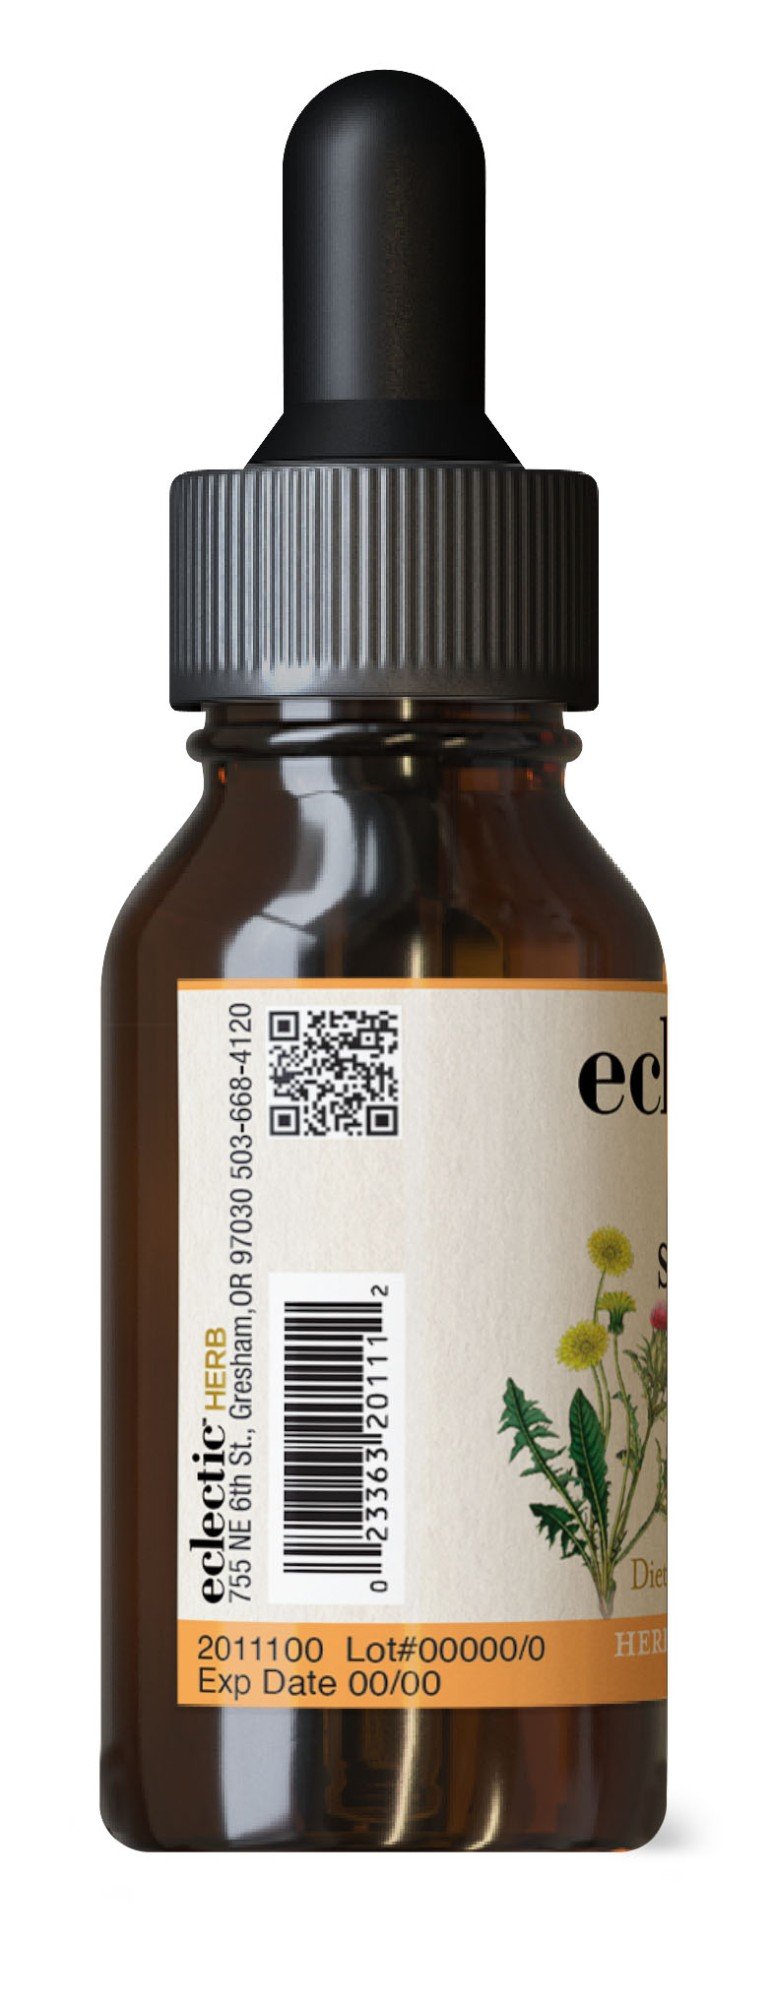 Eclectic Herb Liver Support (formerly Milk Thistle-Dandelion) Tangerine Flavor No Alcohol Glycerite 1 oz Liquid